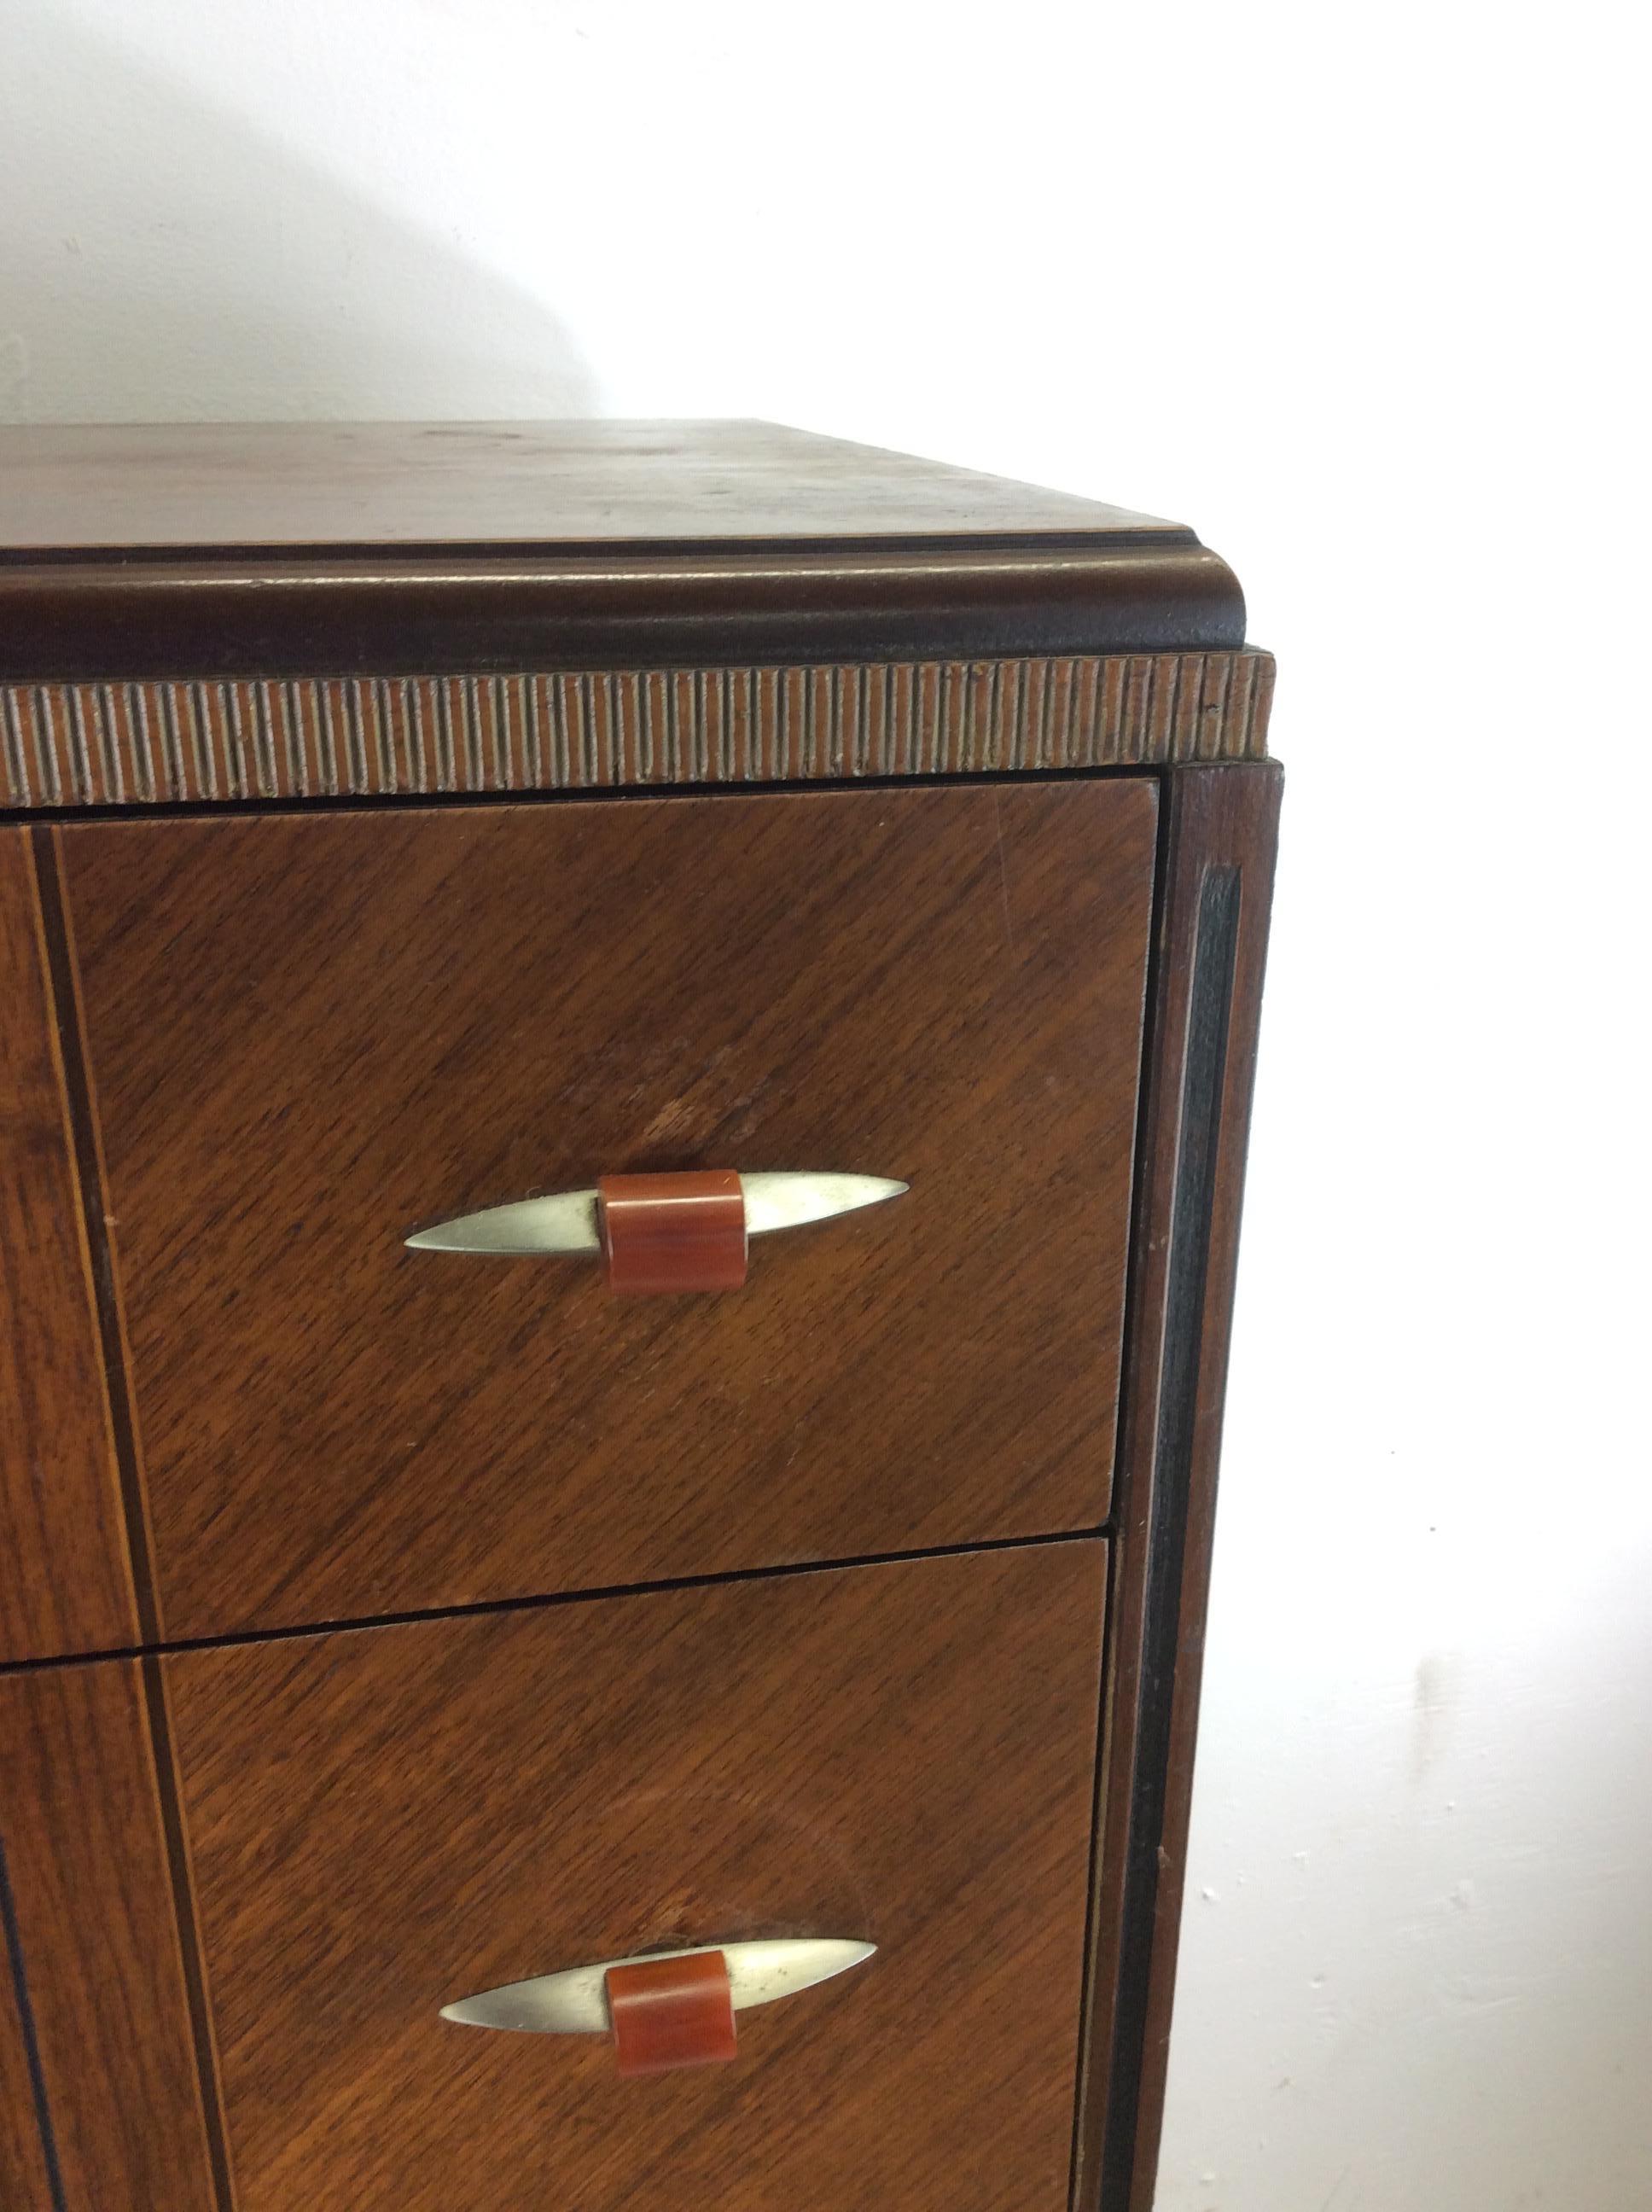 Antique Art Deco Highboy Dresser with Bakelite Hardware For Sale 4